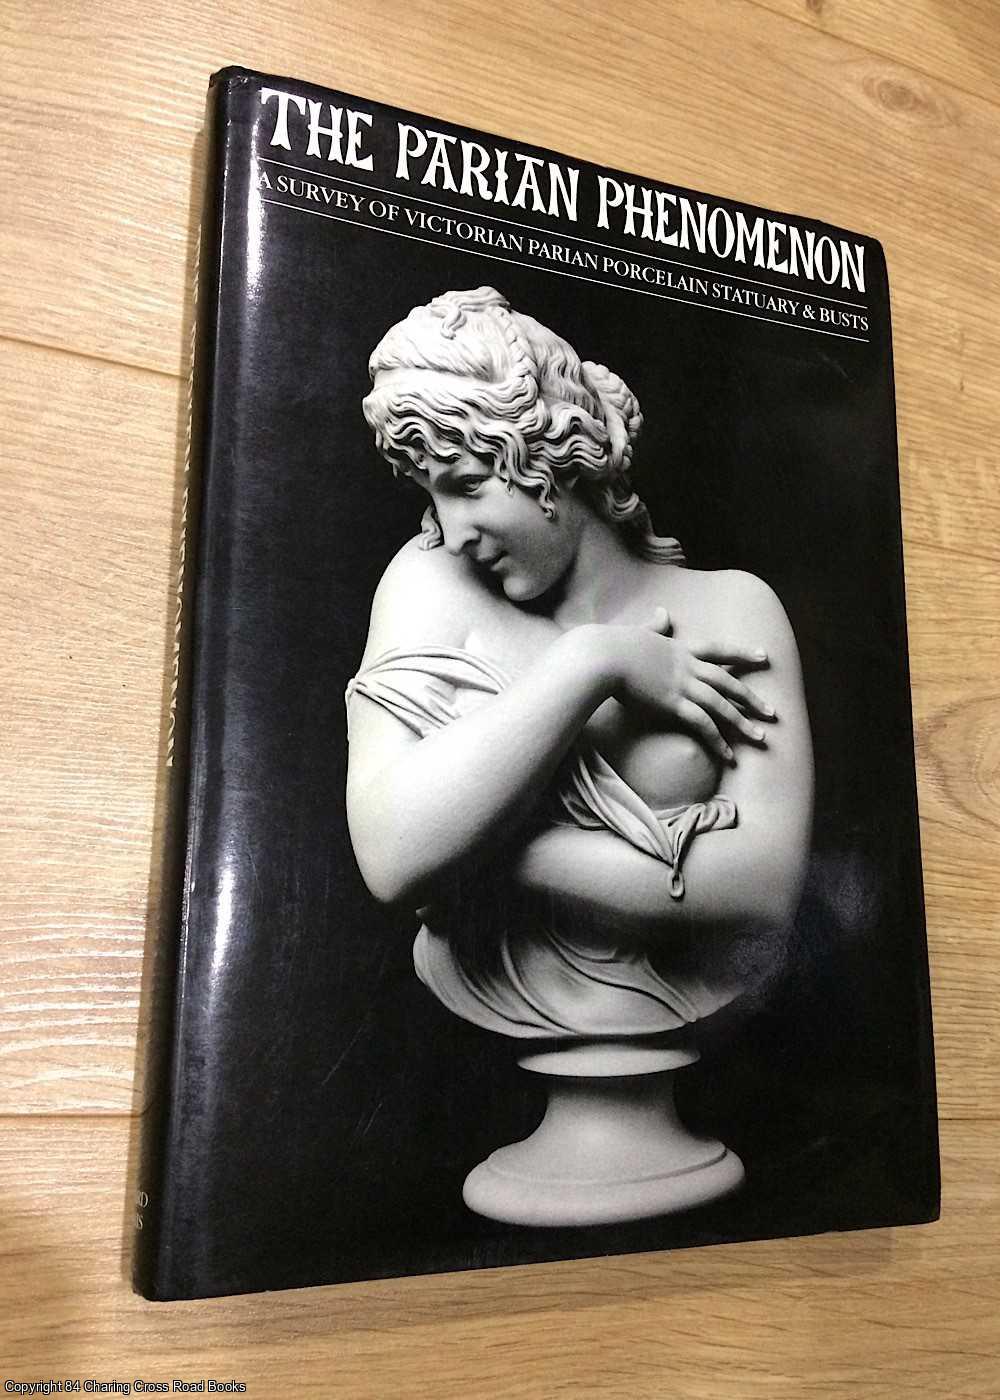 Batkin, Maureen, Atterbury, Paul - The Parian Phenomenon: Survey of Victorian Parian Porcelain Statuary and Busts